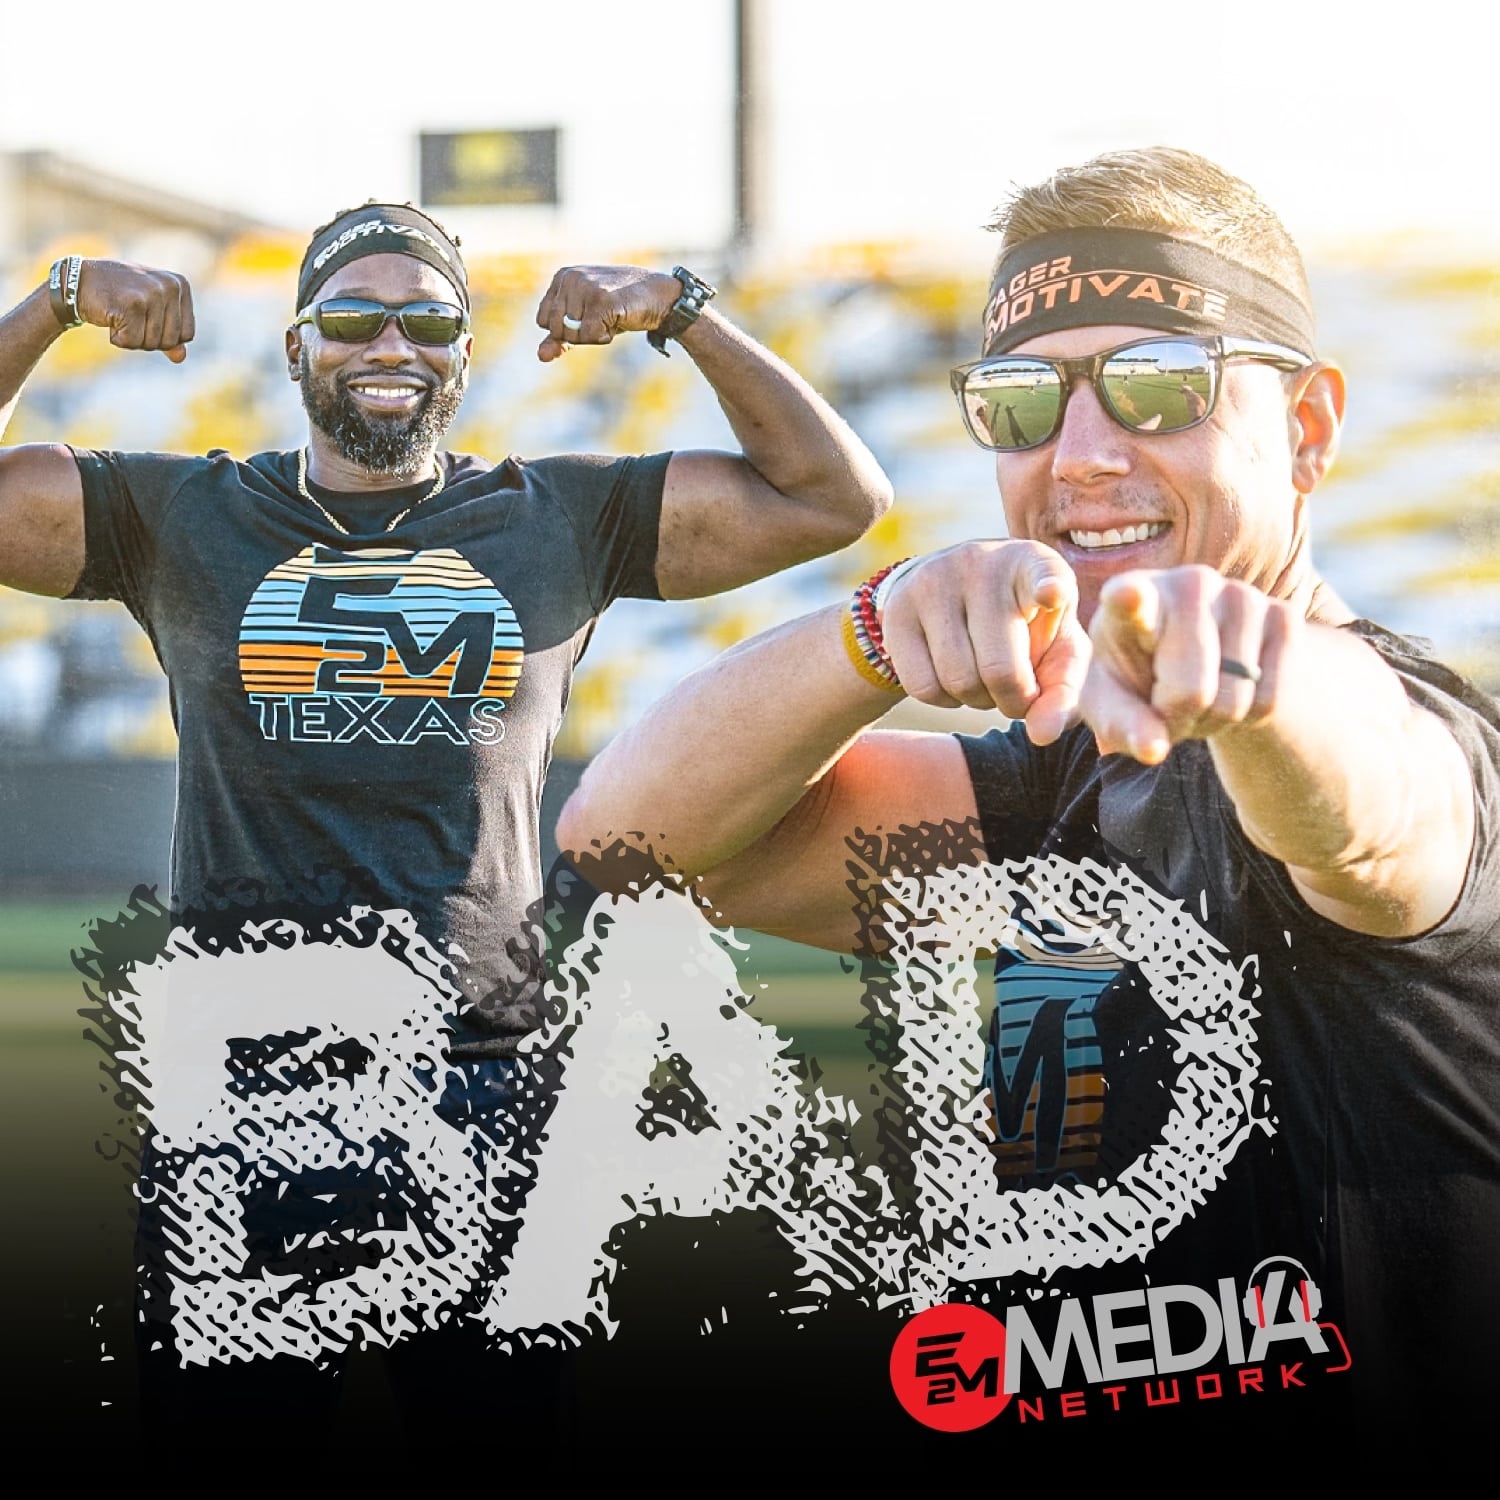 E2M Fitness Media Network -BAD Podcast – Beat Negativity with Positivity